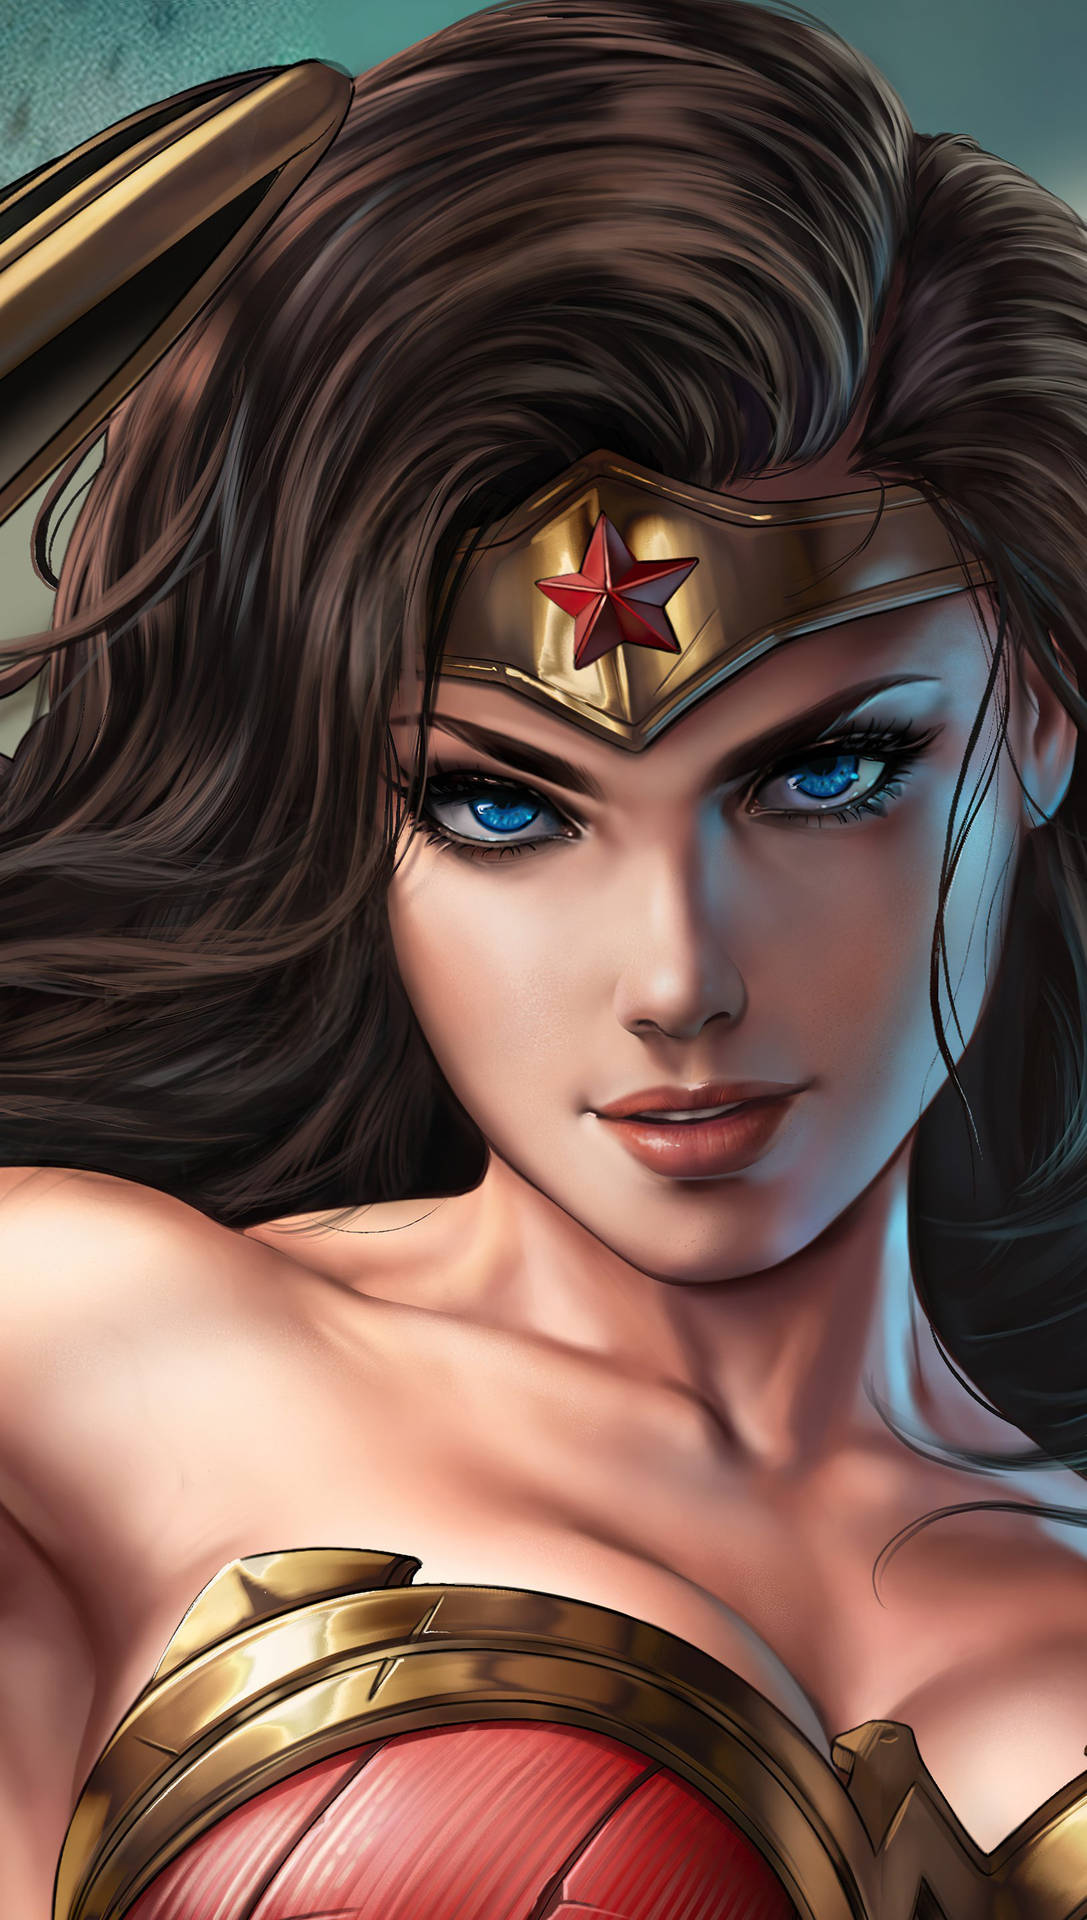 Cute Wonder Woman Digital Art Background